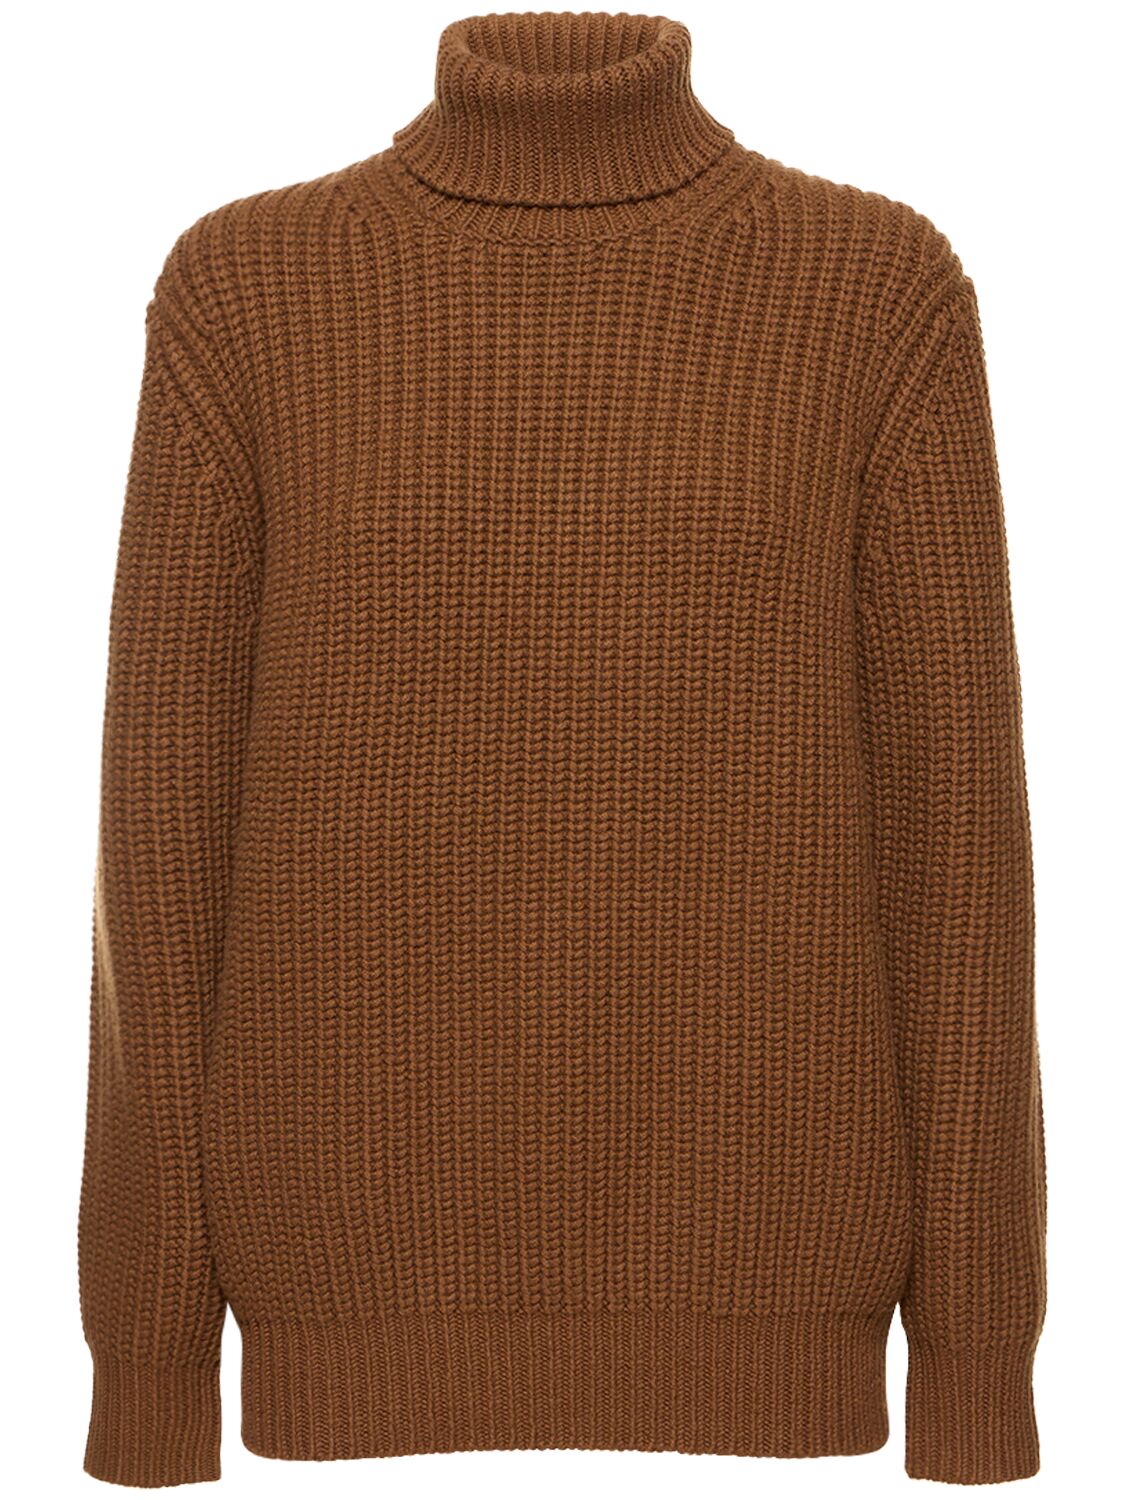 Image of Cashmere Rib Knit Turtleneck Sweater